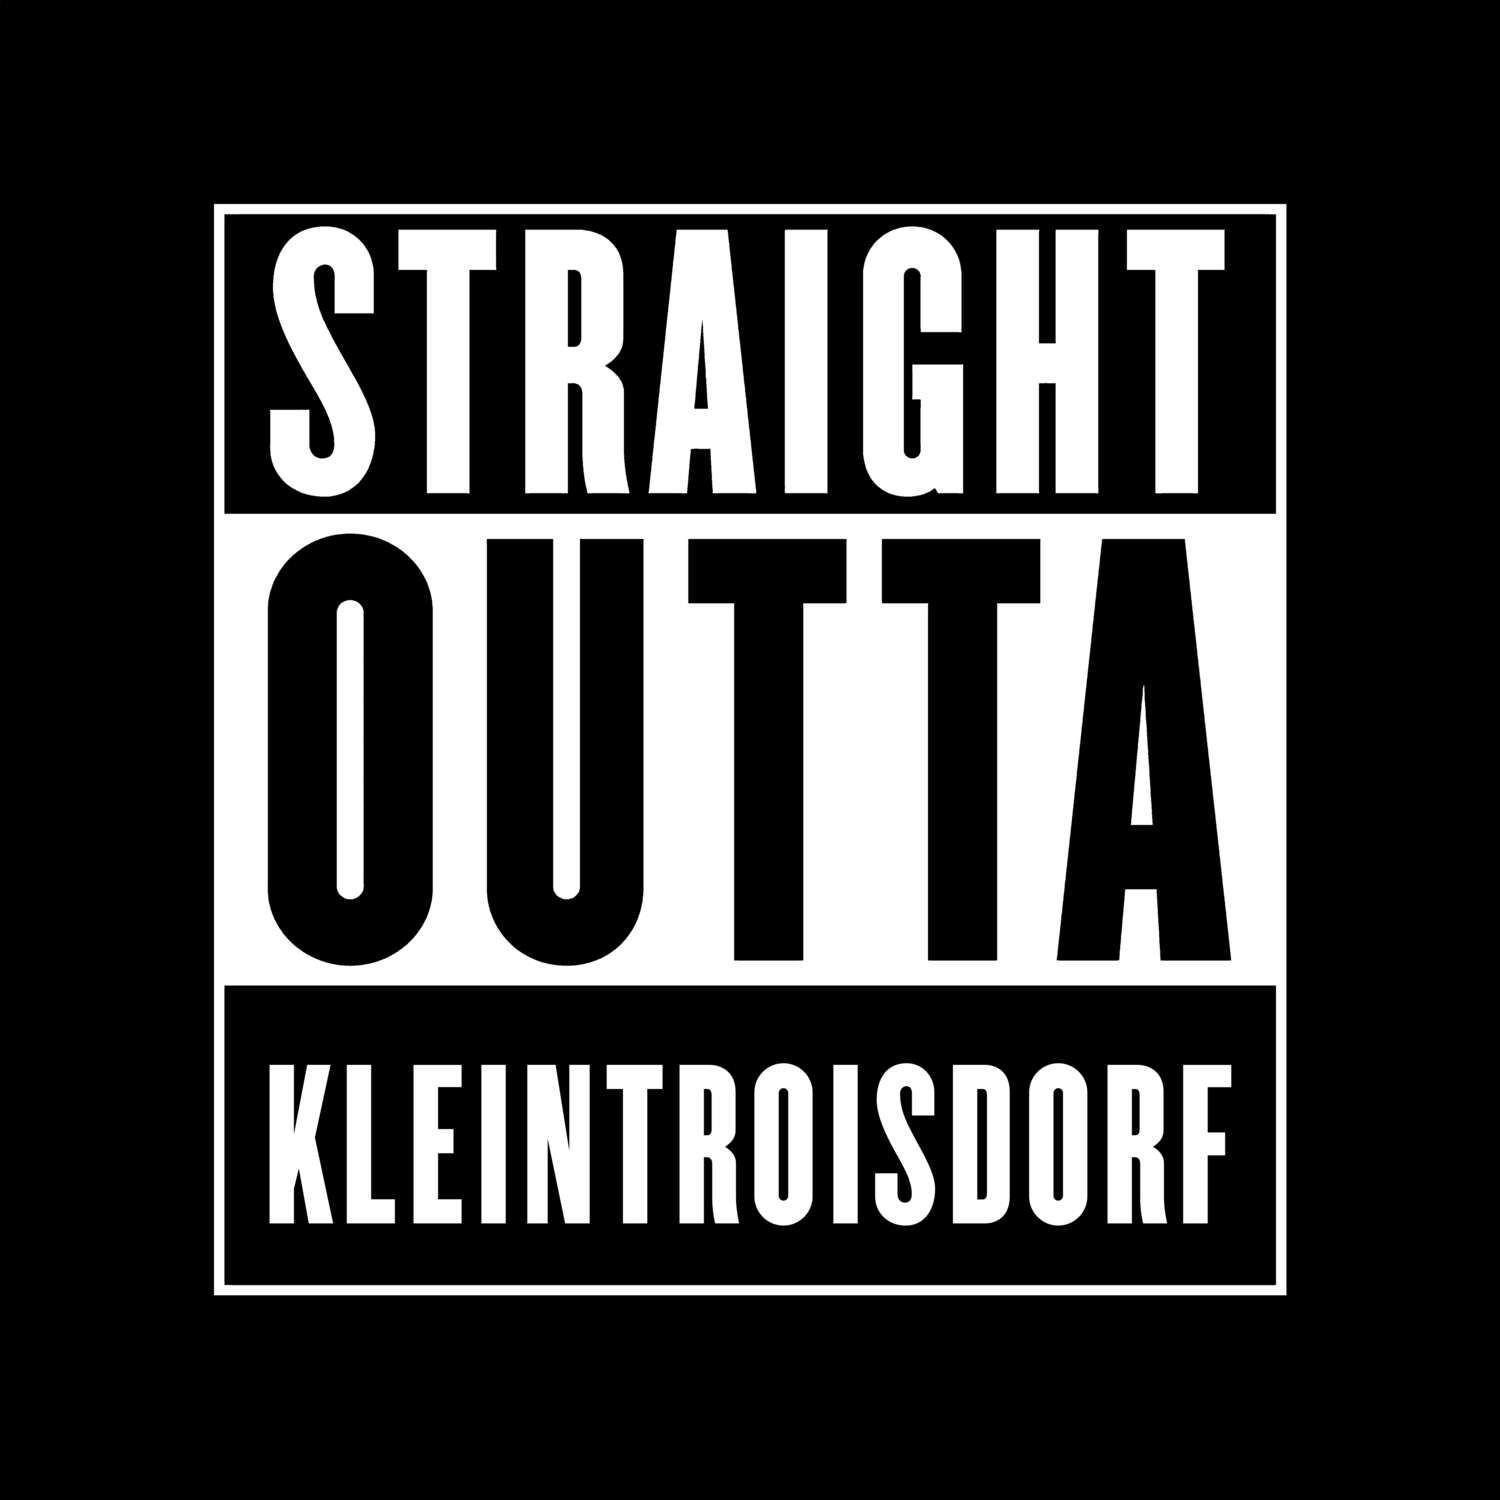 Kleintroisdorf T-Shirt »Straight Outta«